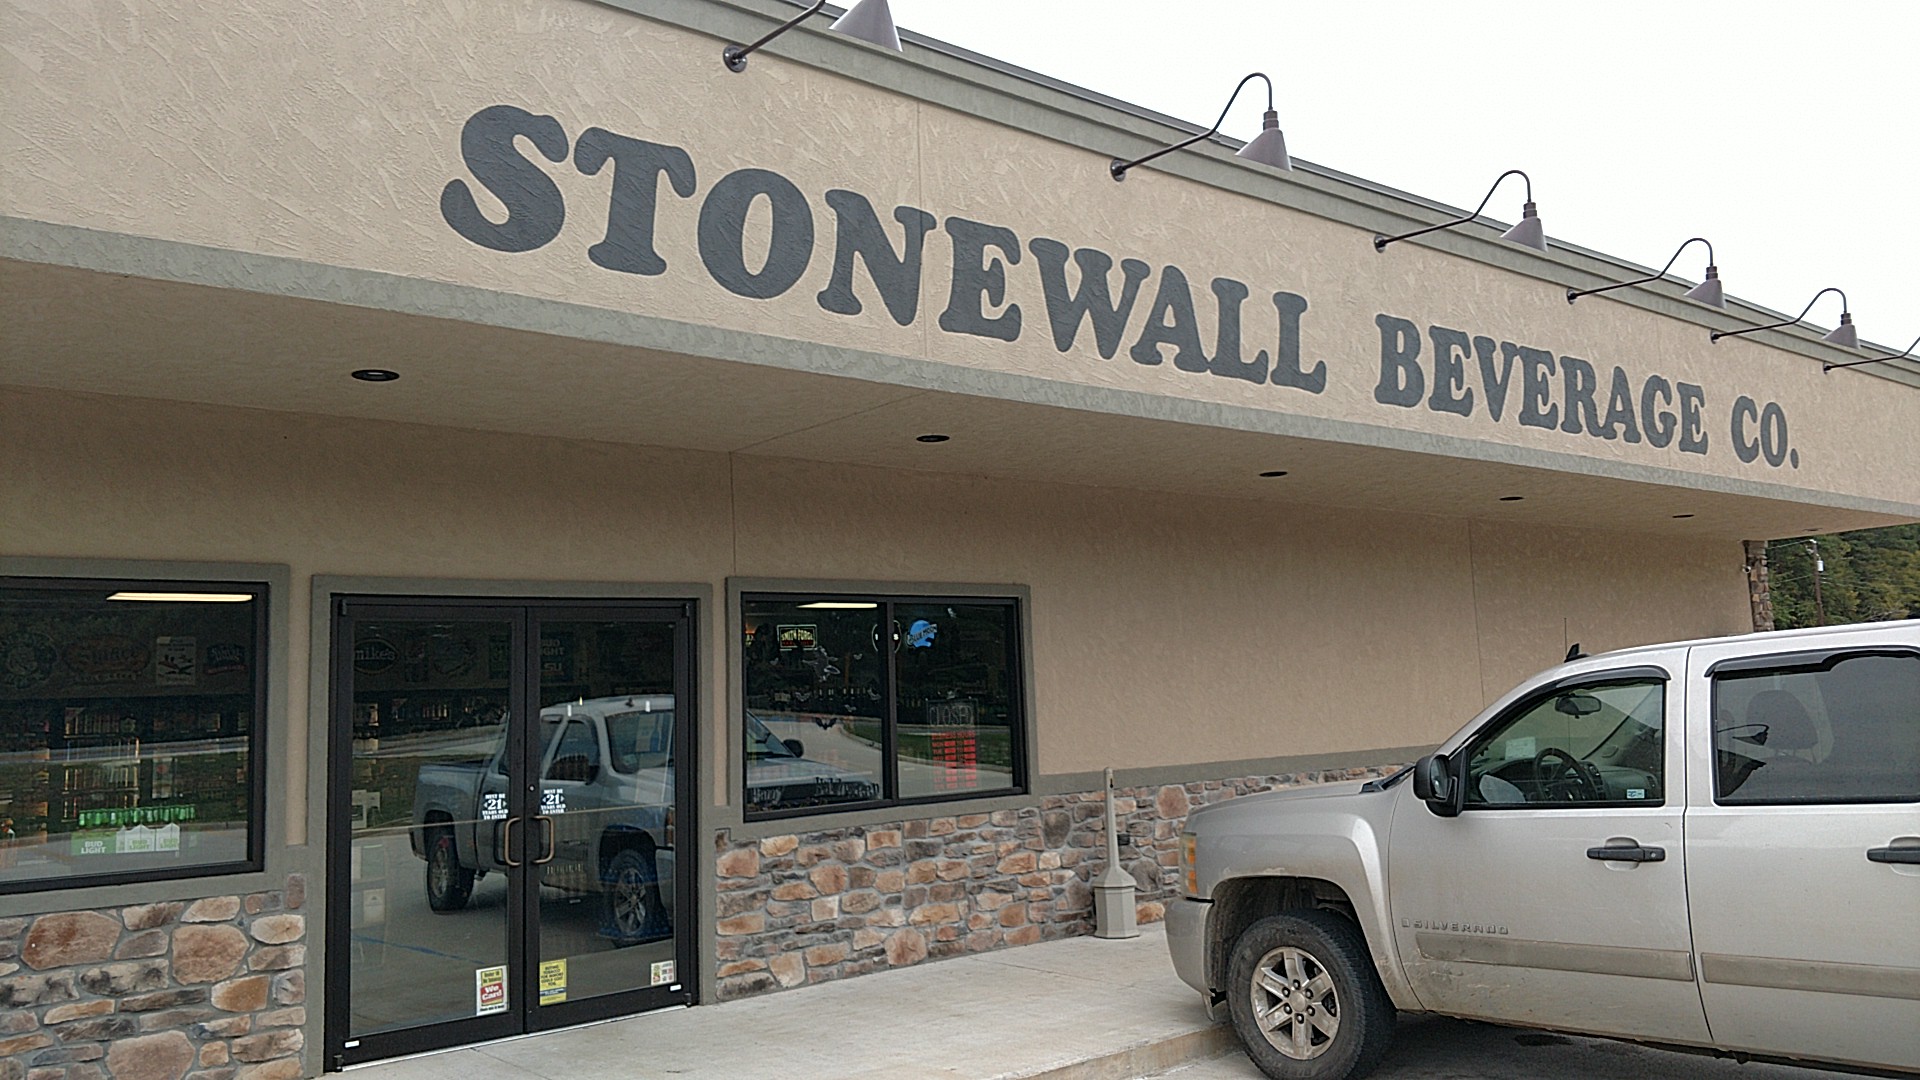 Stonewall Beverage Co